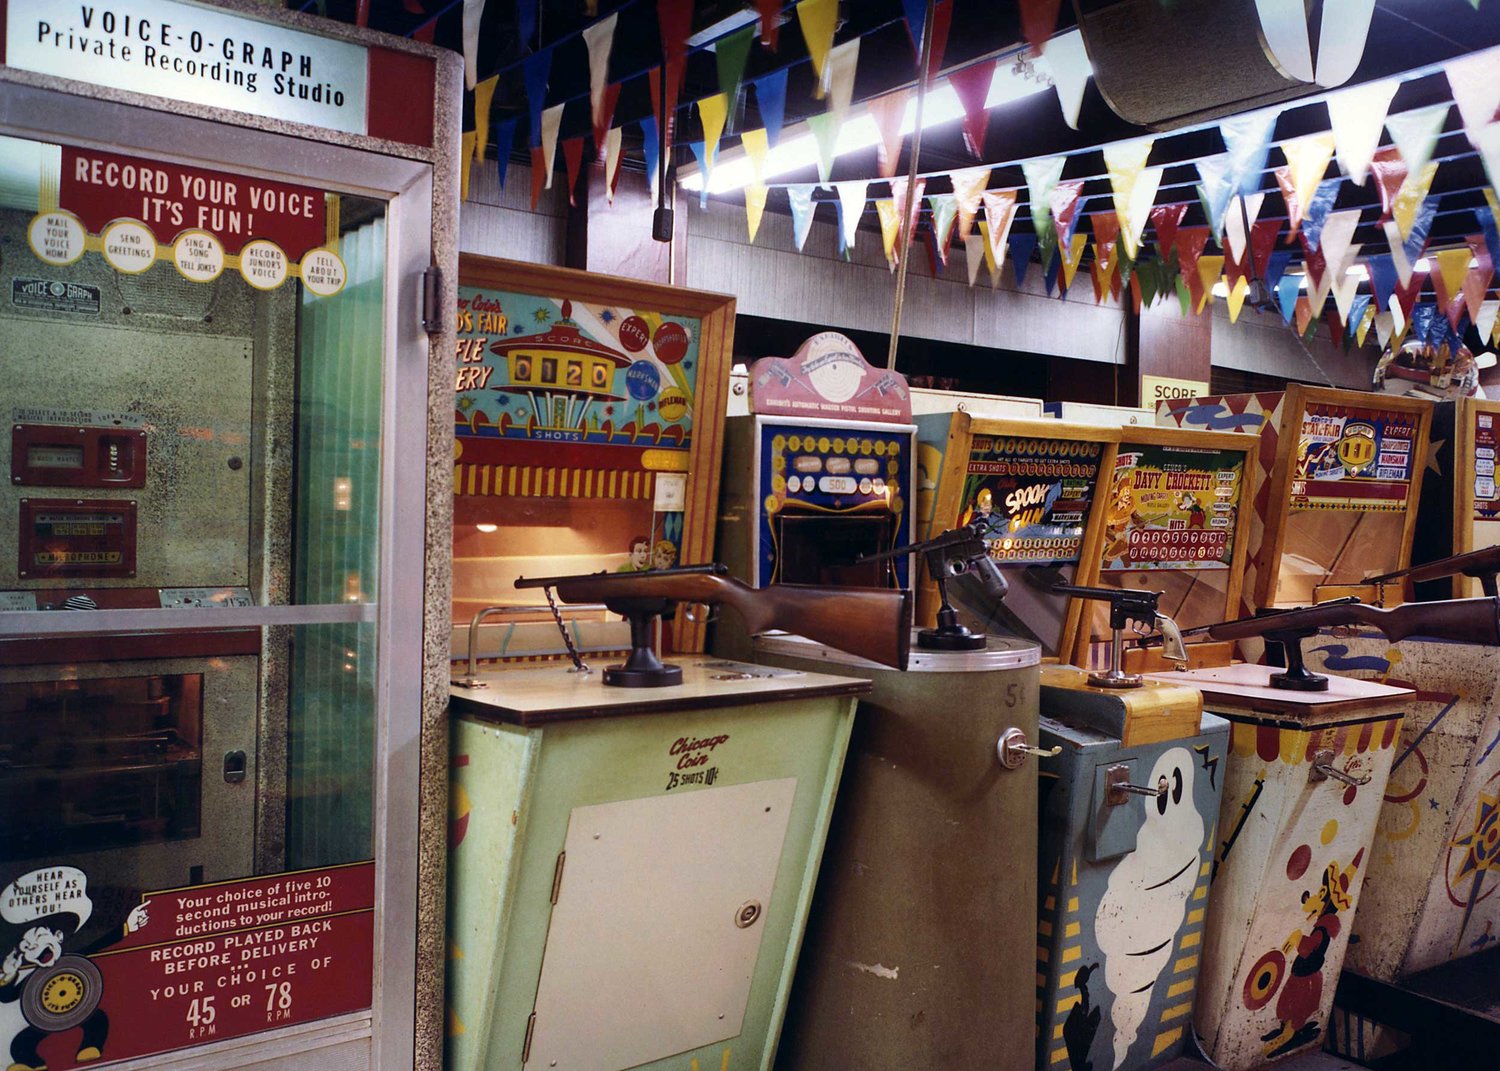 Wonderland Arcade, Kansas City, Missouri, 1968